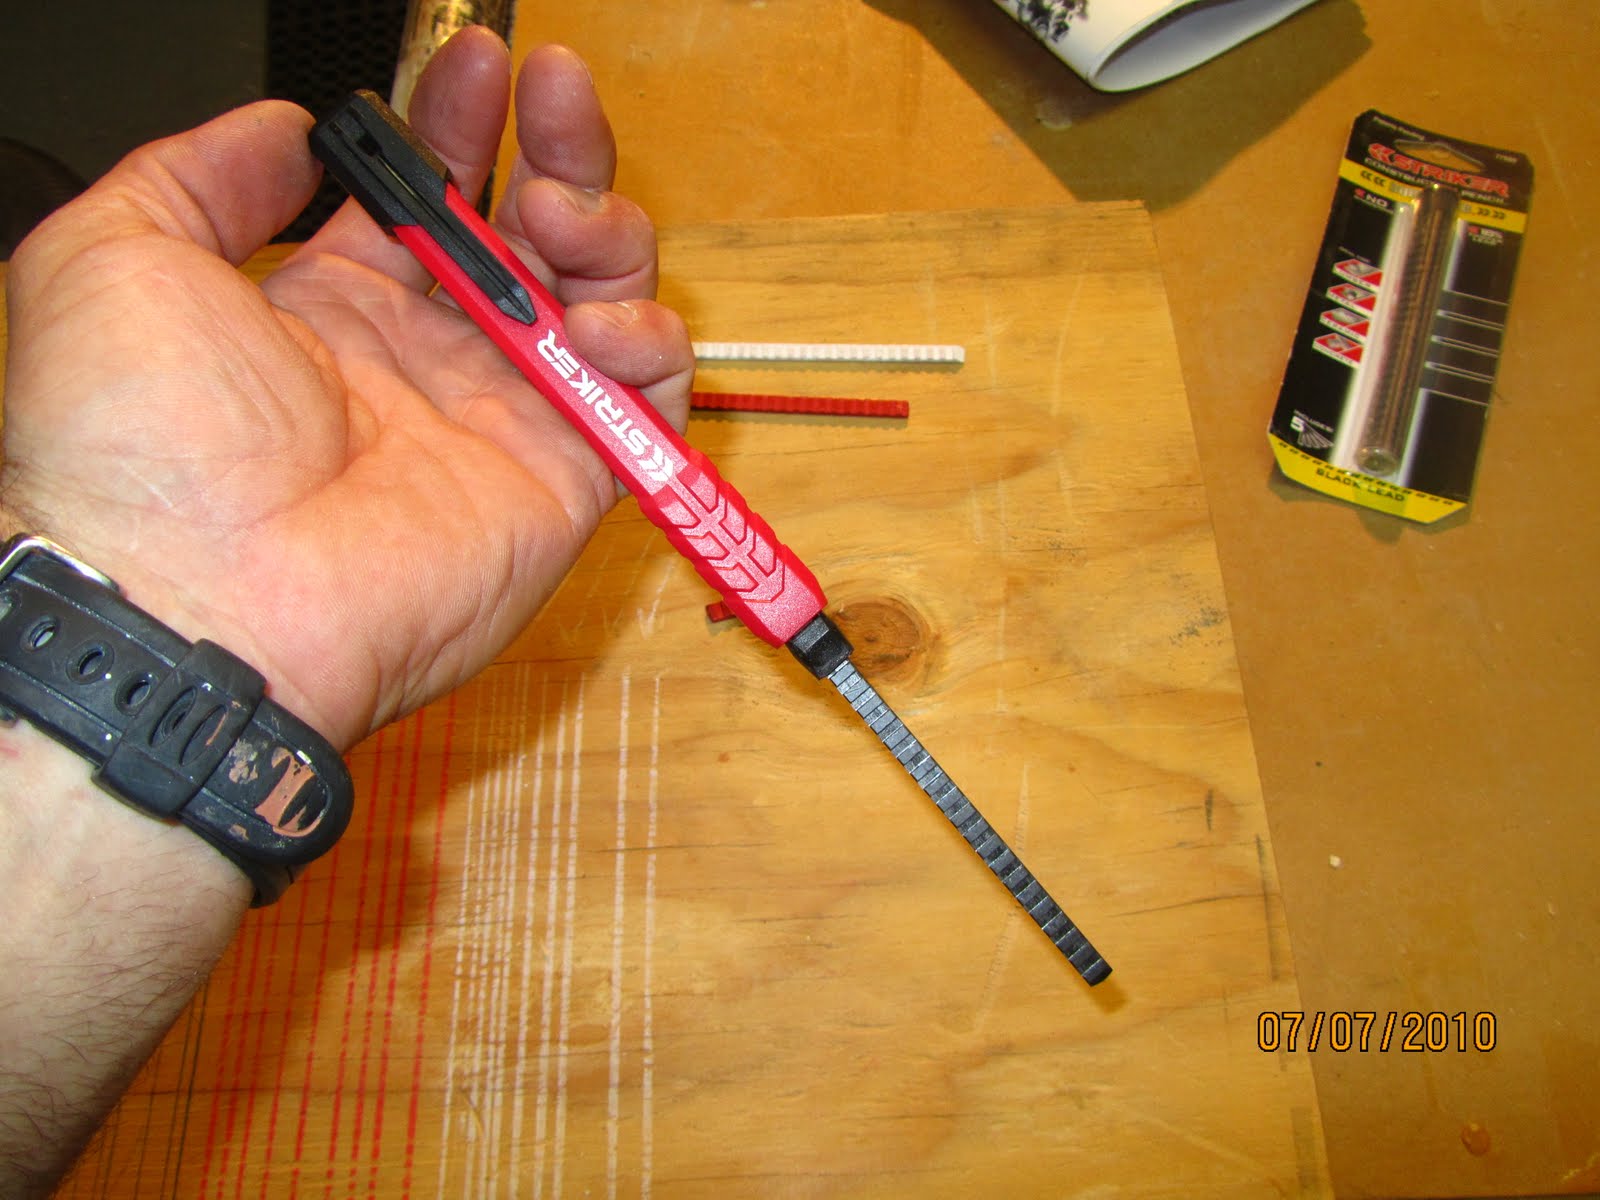 Striker Mechanical Carpenter Pencil